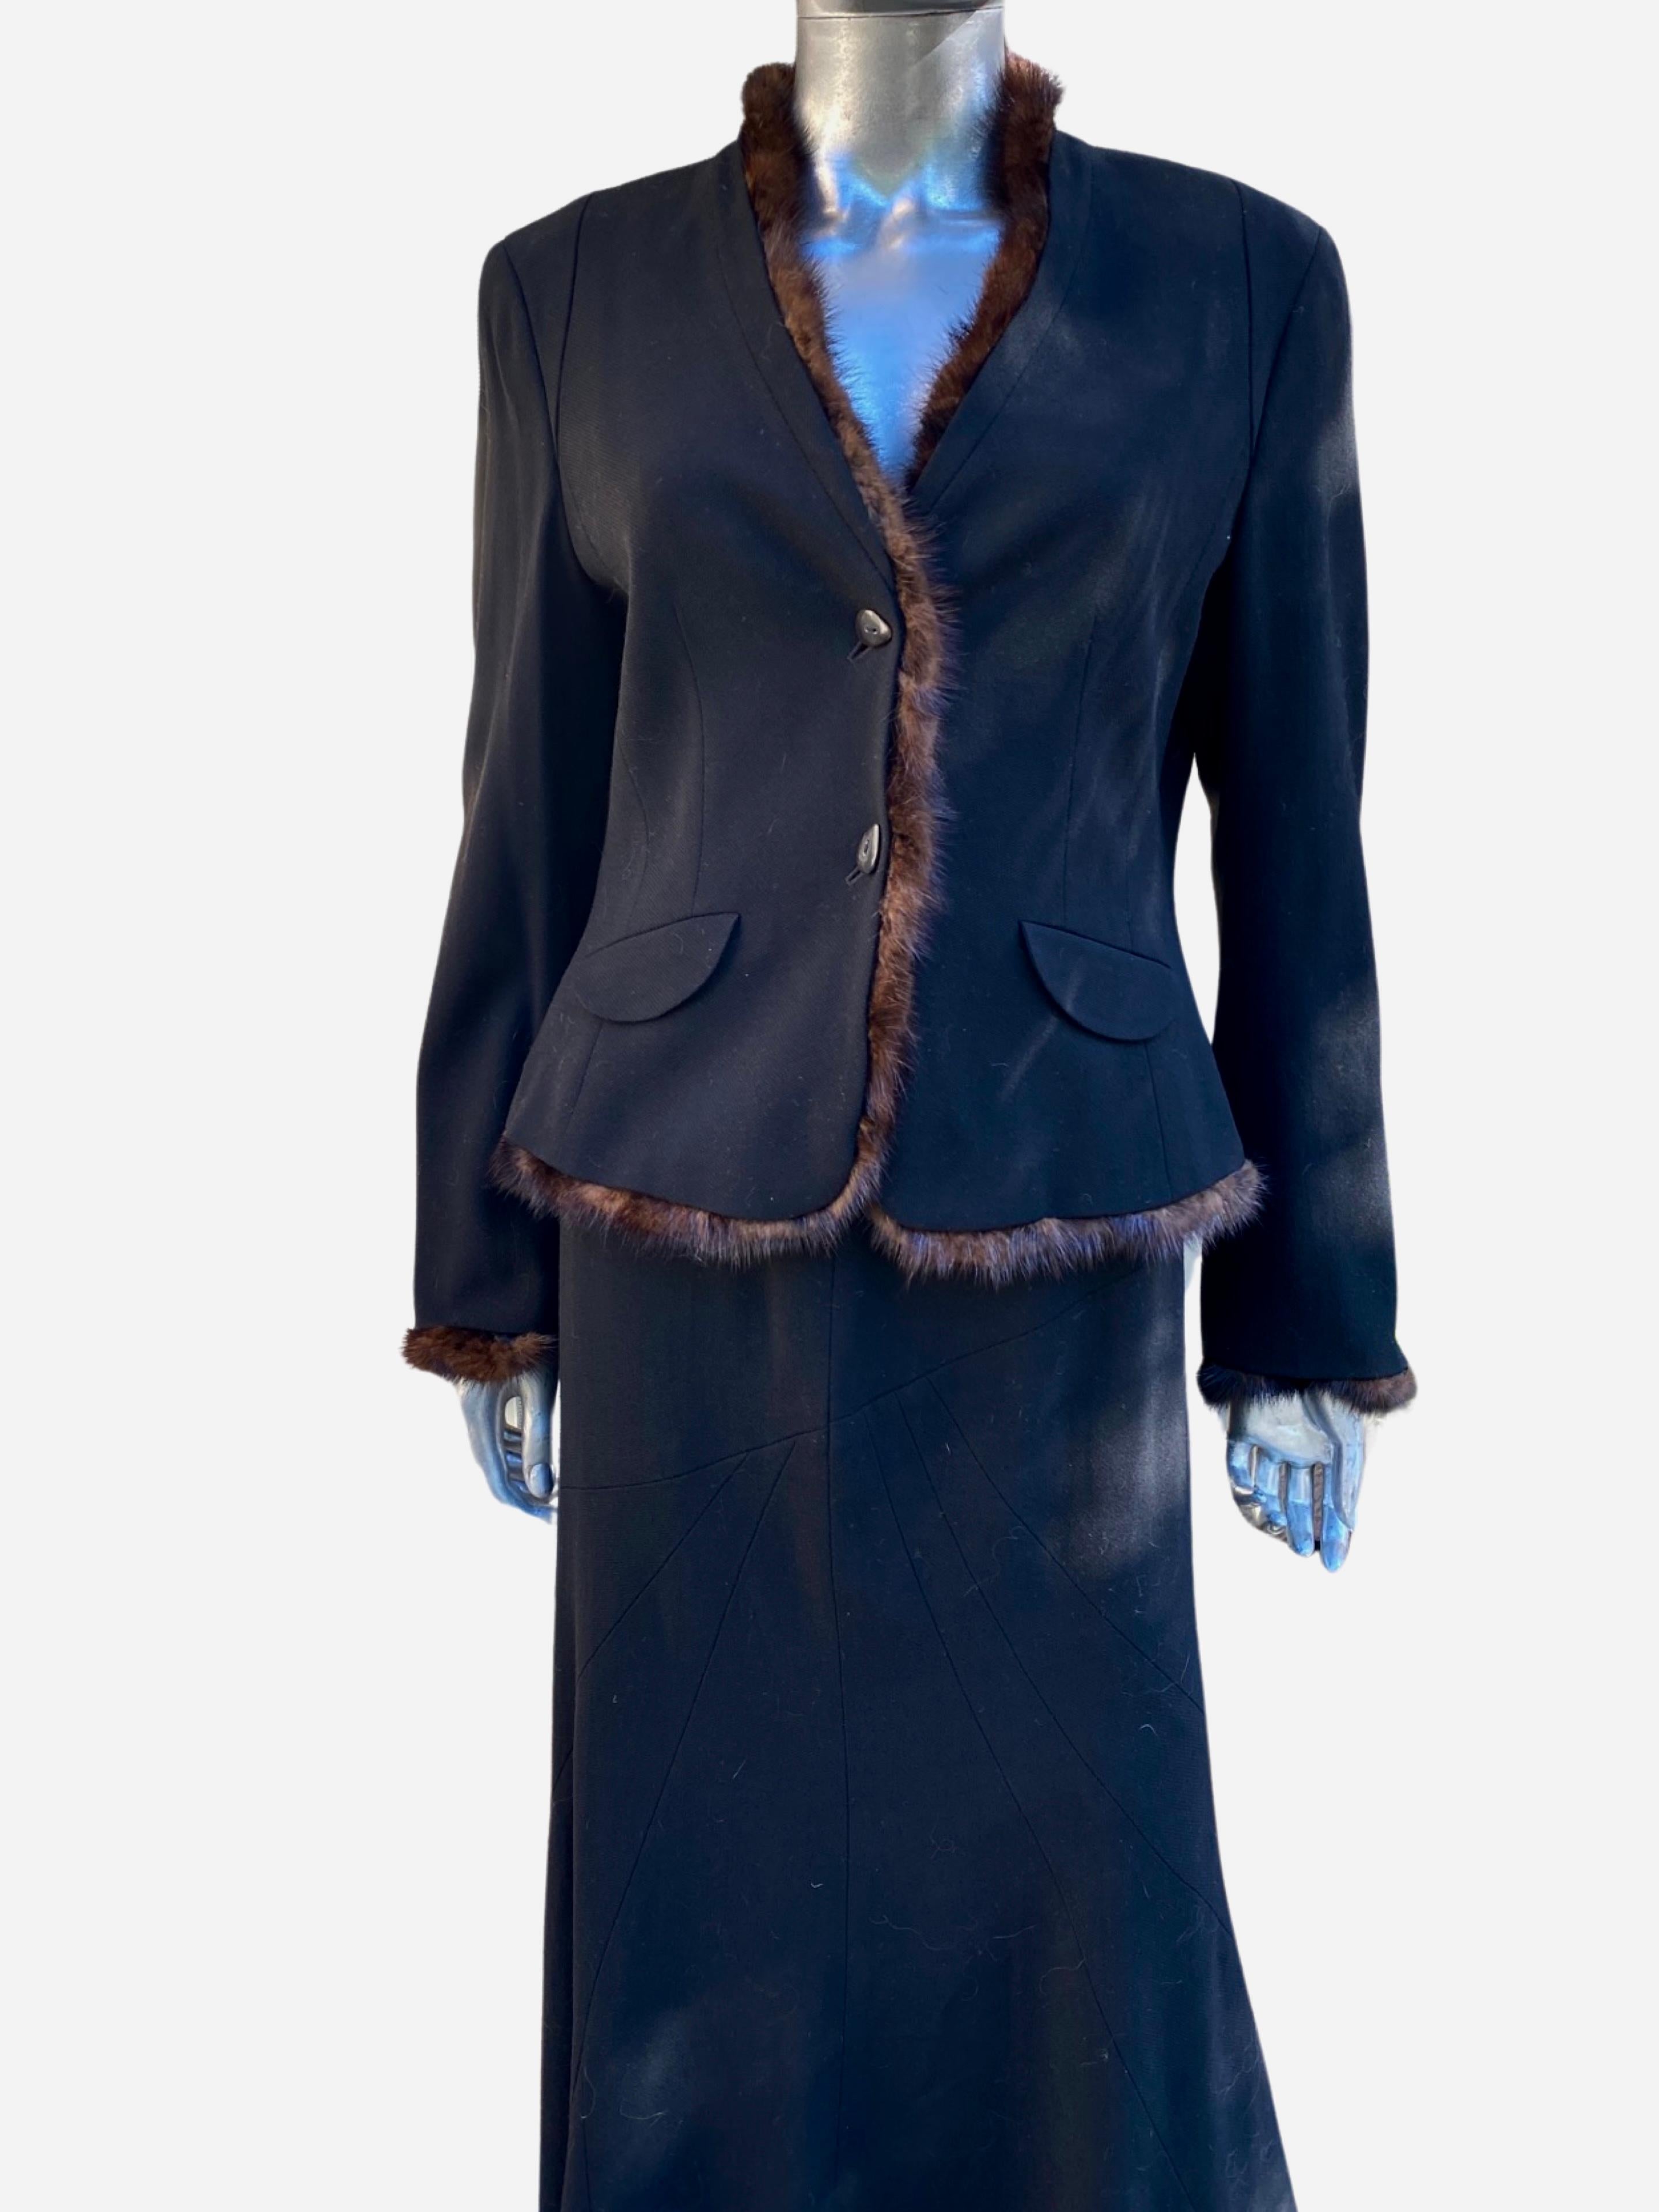 Worth New York CHIC! Black Wool Crepe Suit w/ Mink Trim Jacket Sz 12/14 For Sale 3